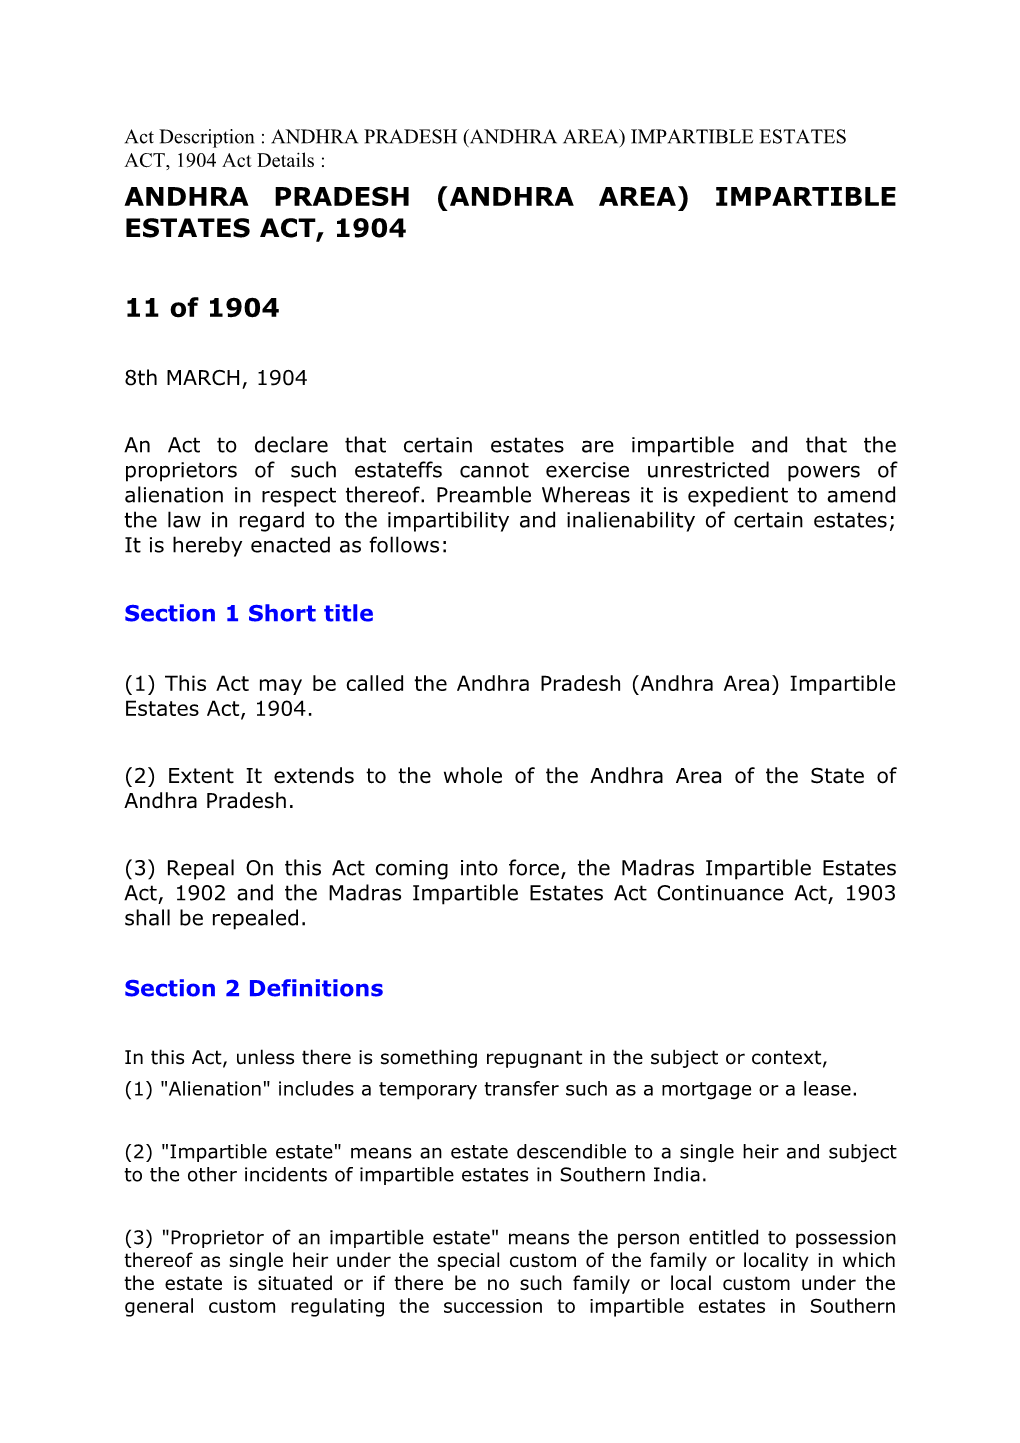 Andhra Pradesh (Andhra Area) Impartible Estates Act, 1904